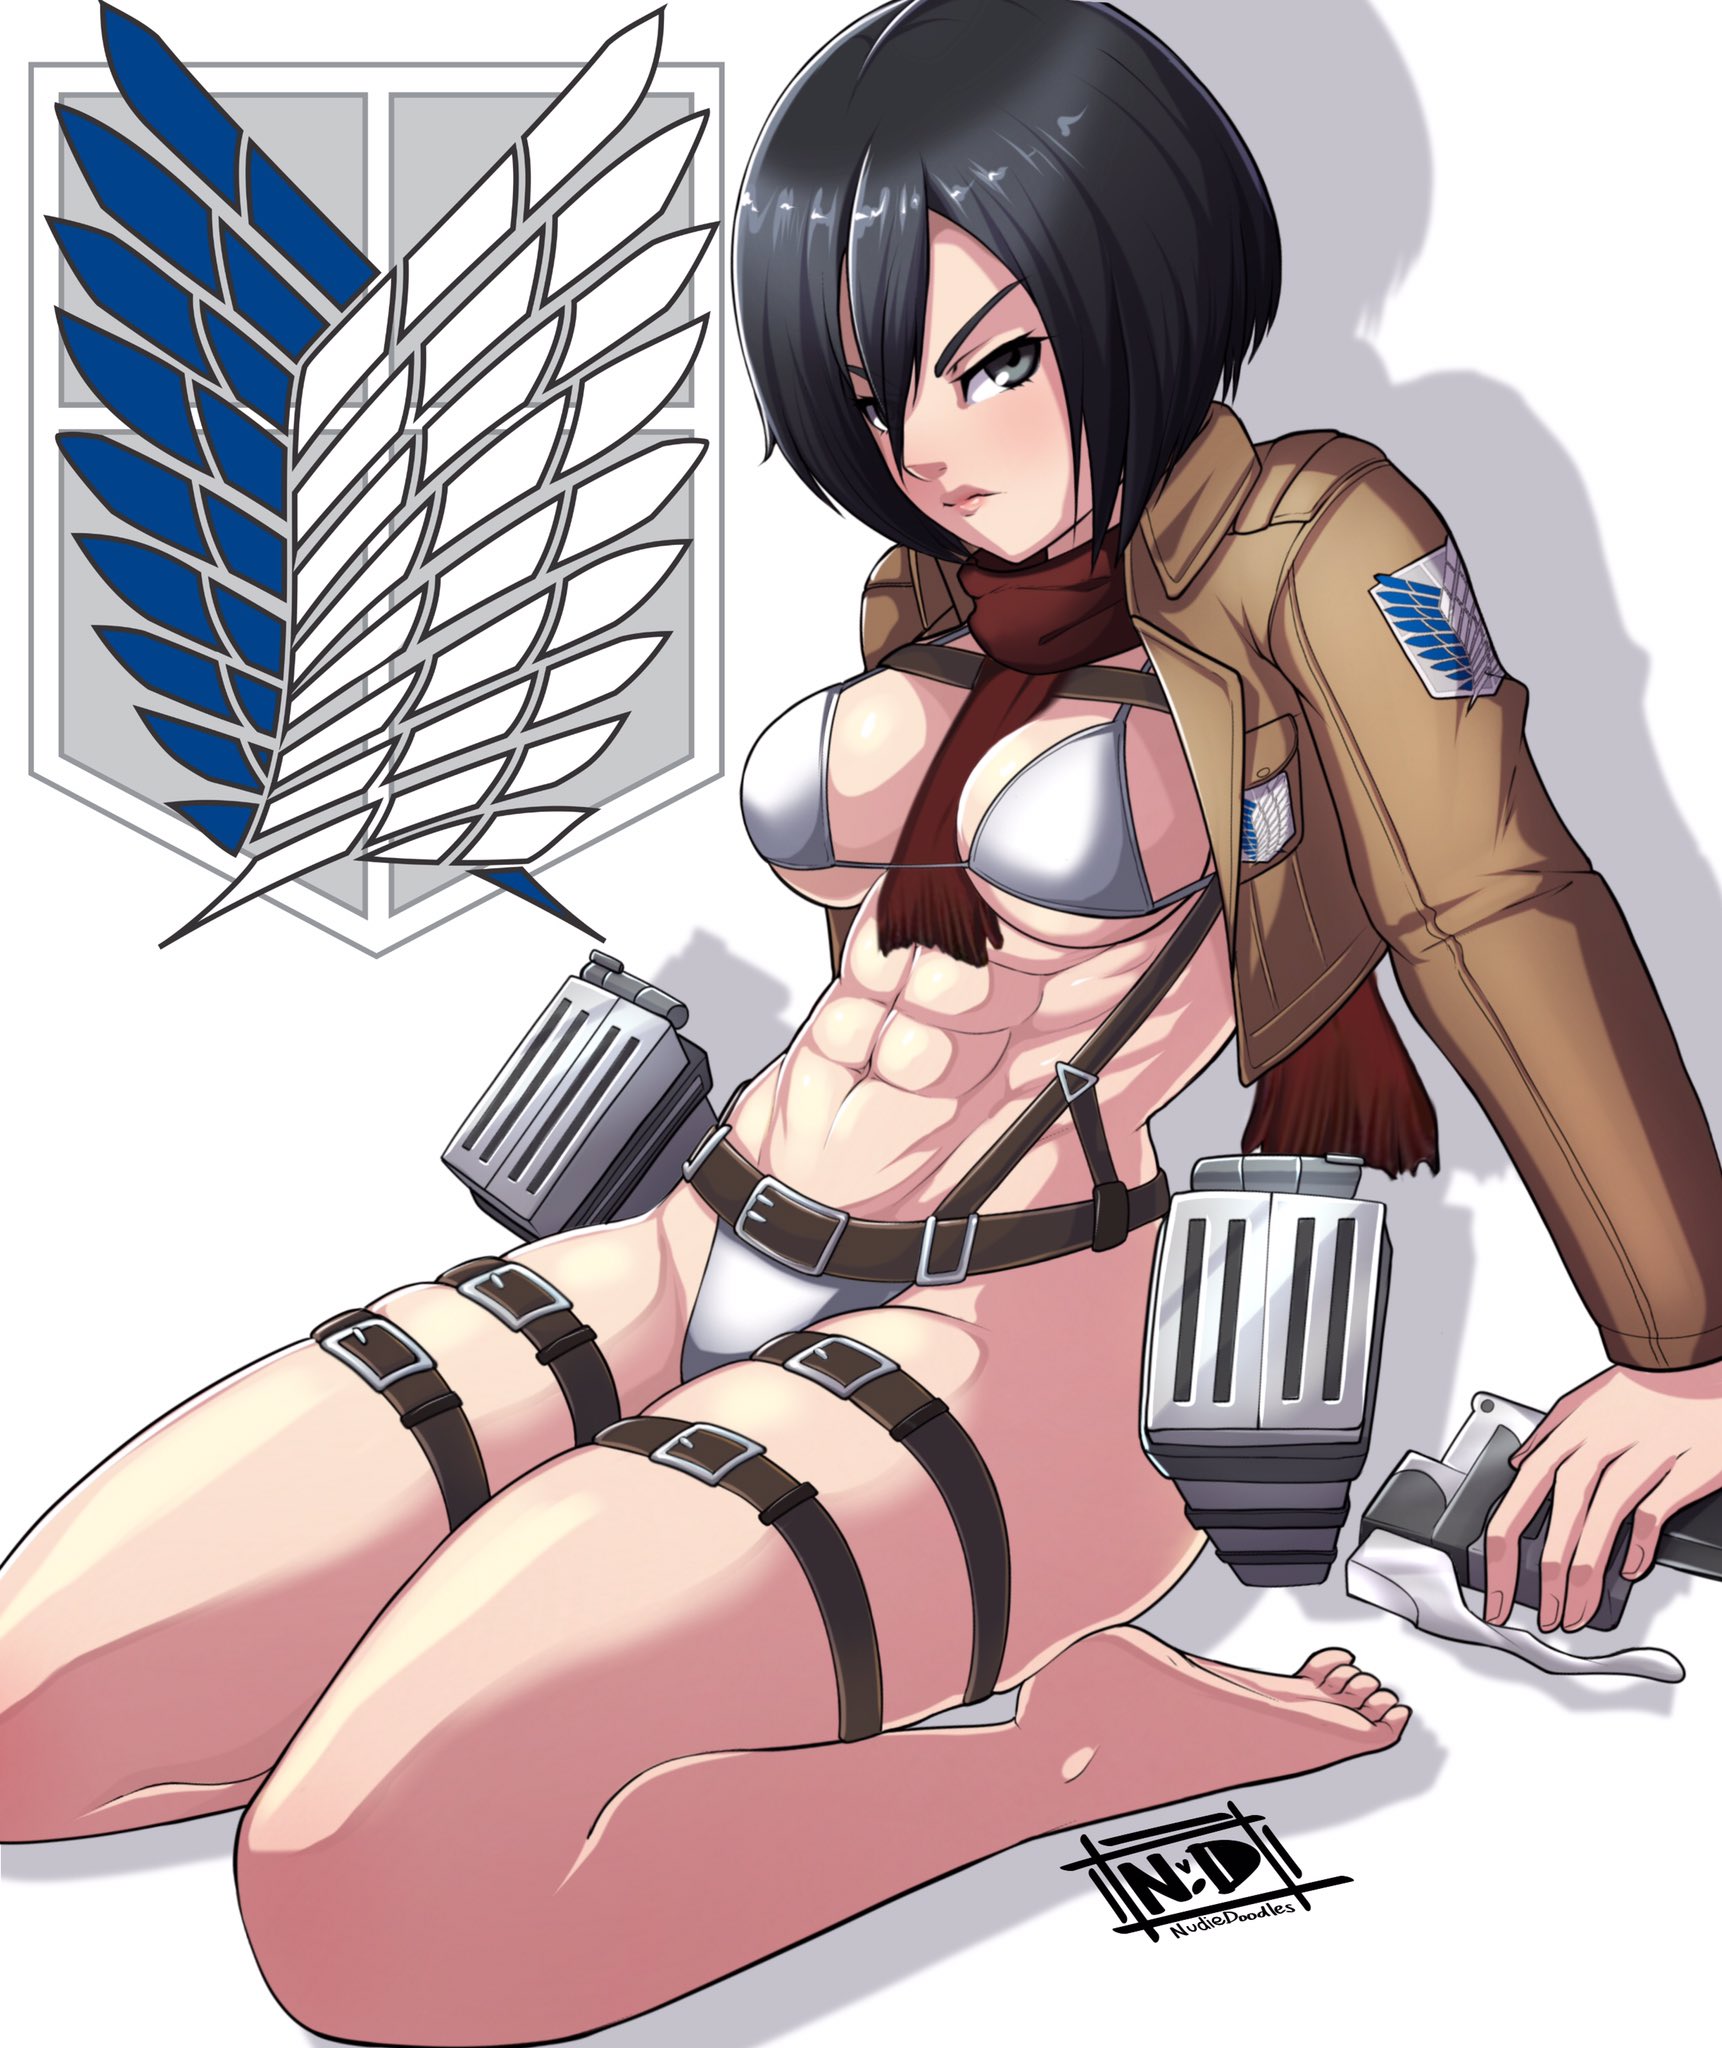 Bikini fit Mikasa | Attack on Titan / Shingeki No Kyojin | Know Your Meme